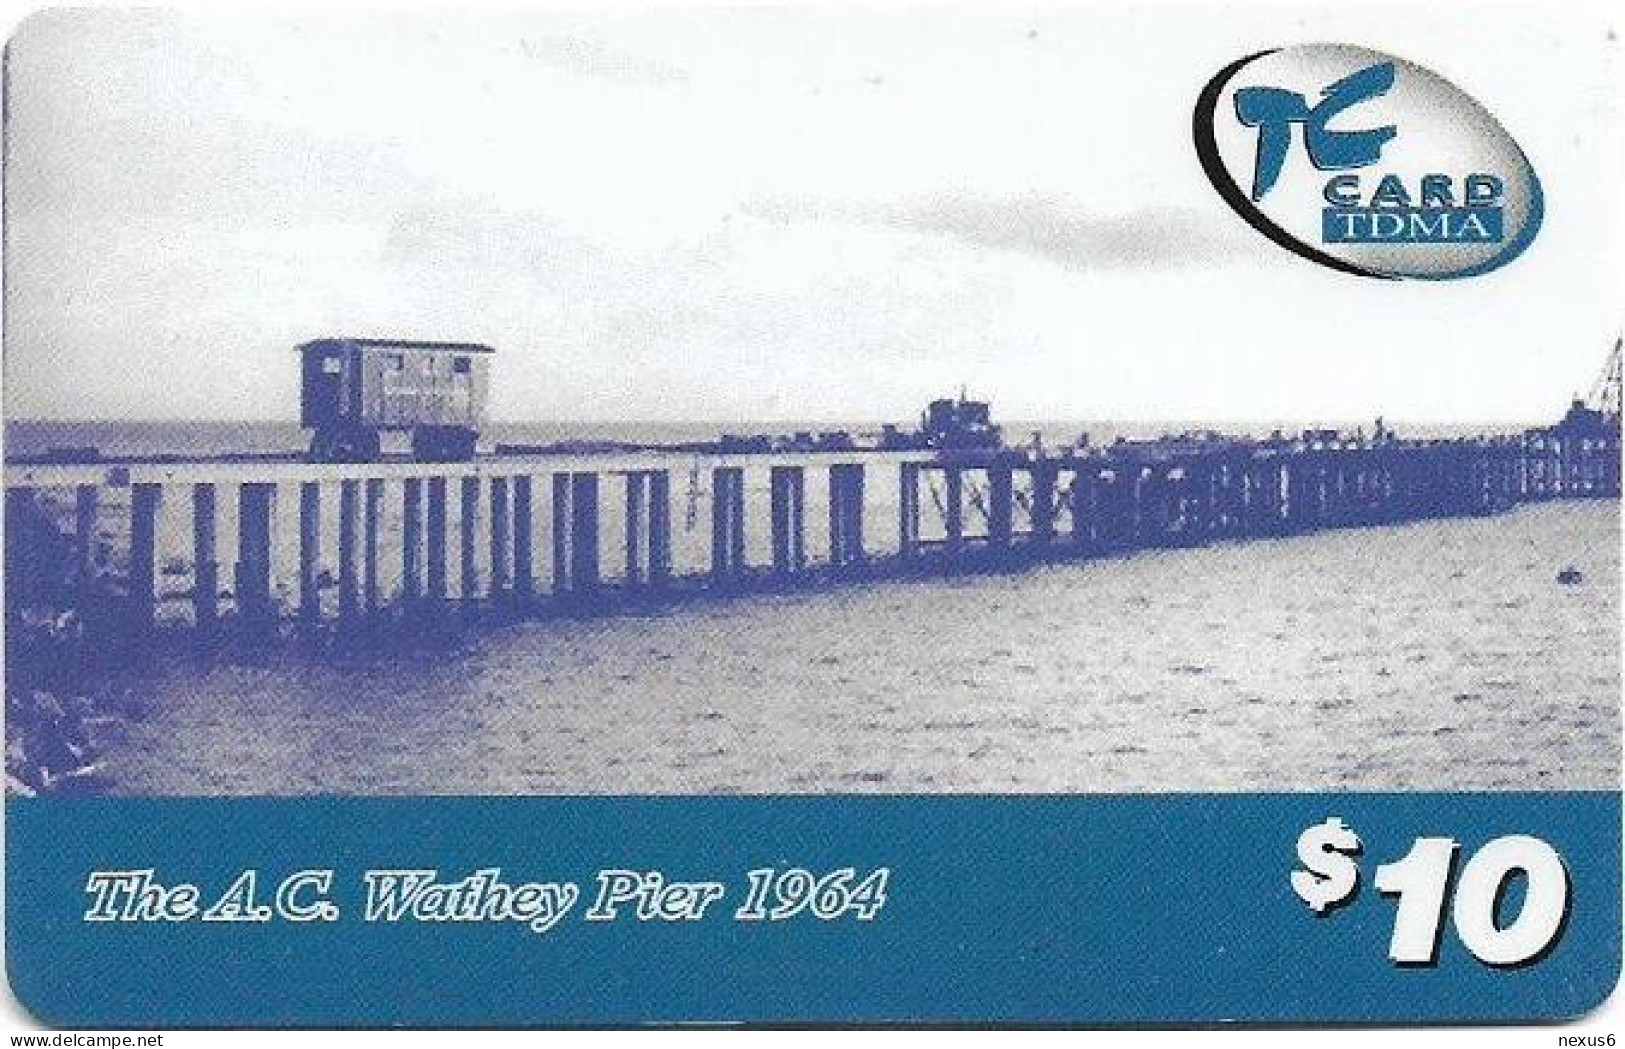 St. Maarten (Antilles Netherlands) - TelCell - The A.C. Wathey Pier 1964, GSM Refill 10$, Used - Antillen (Niederländische)